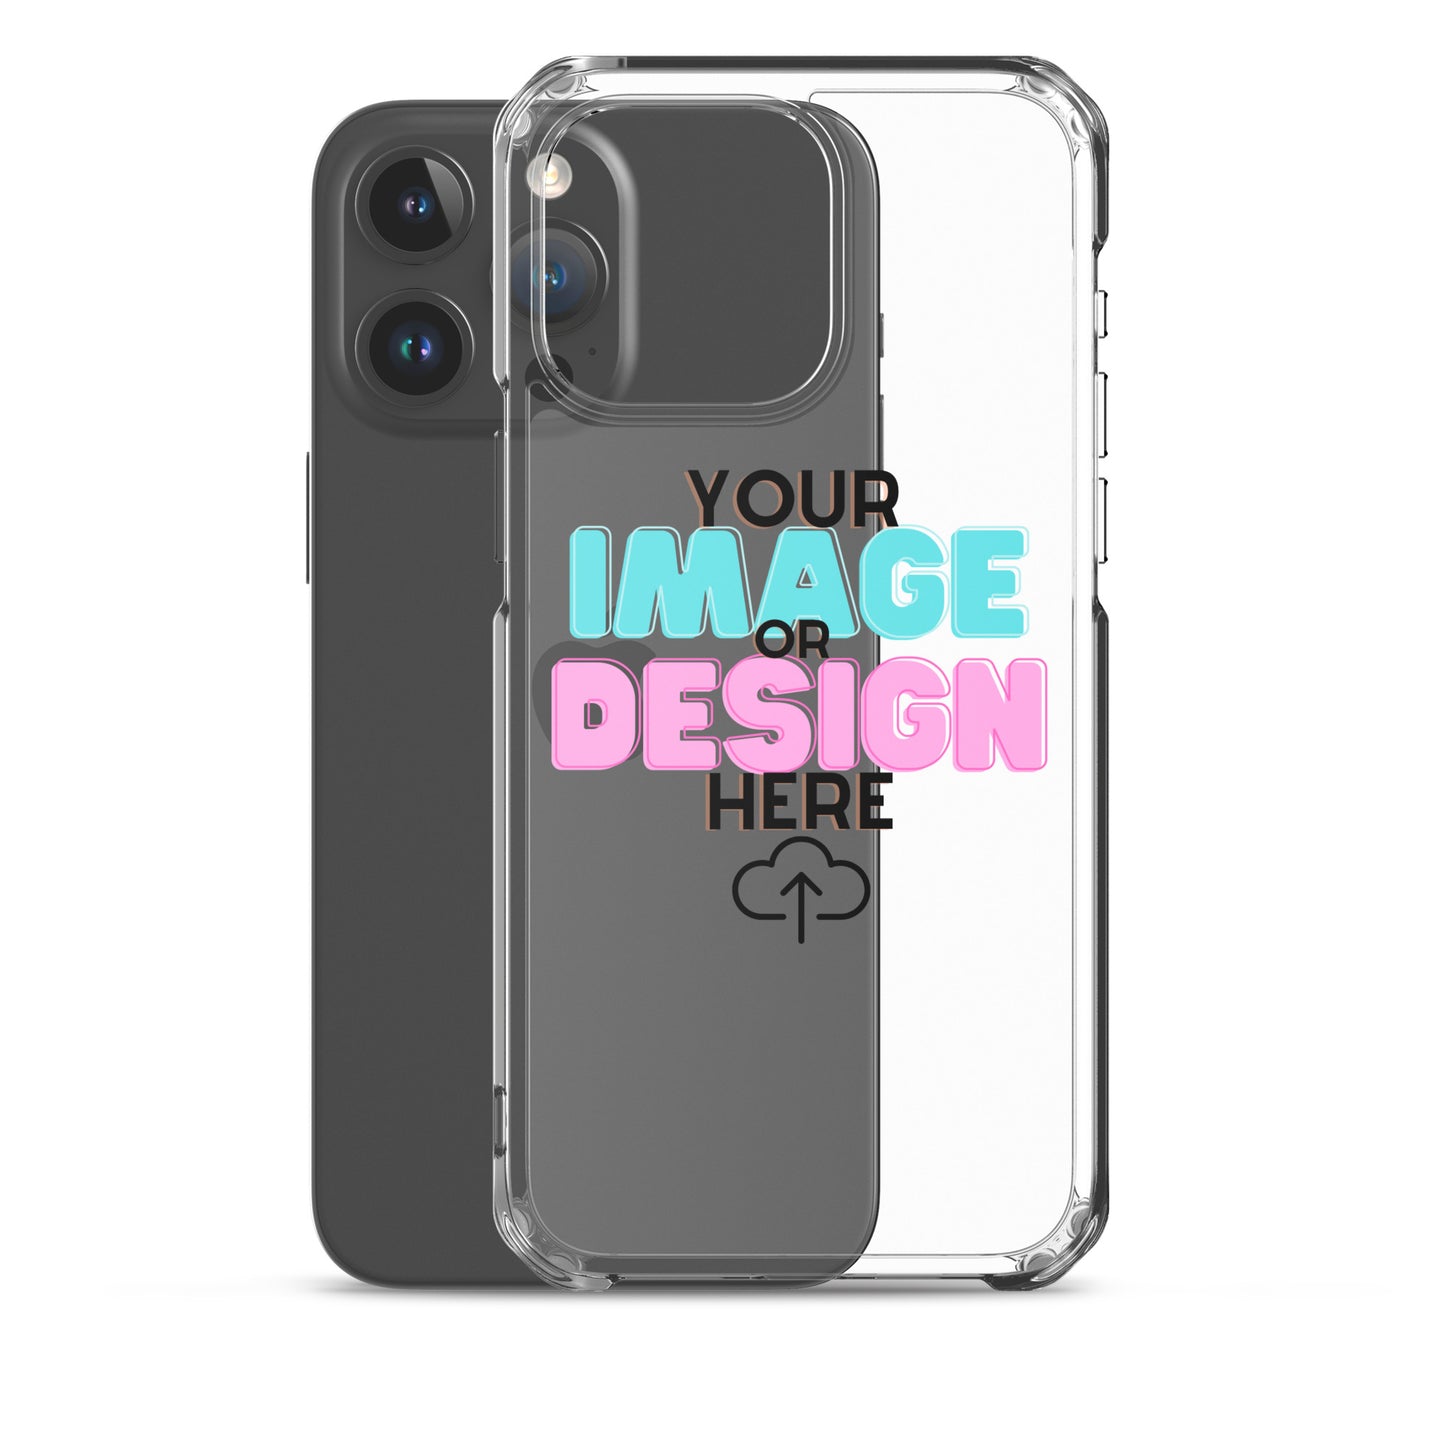 Customizable Iphone case